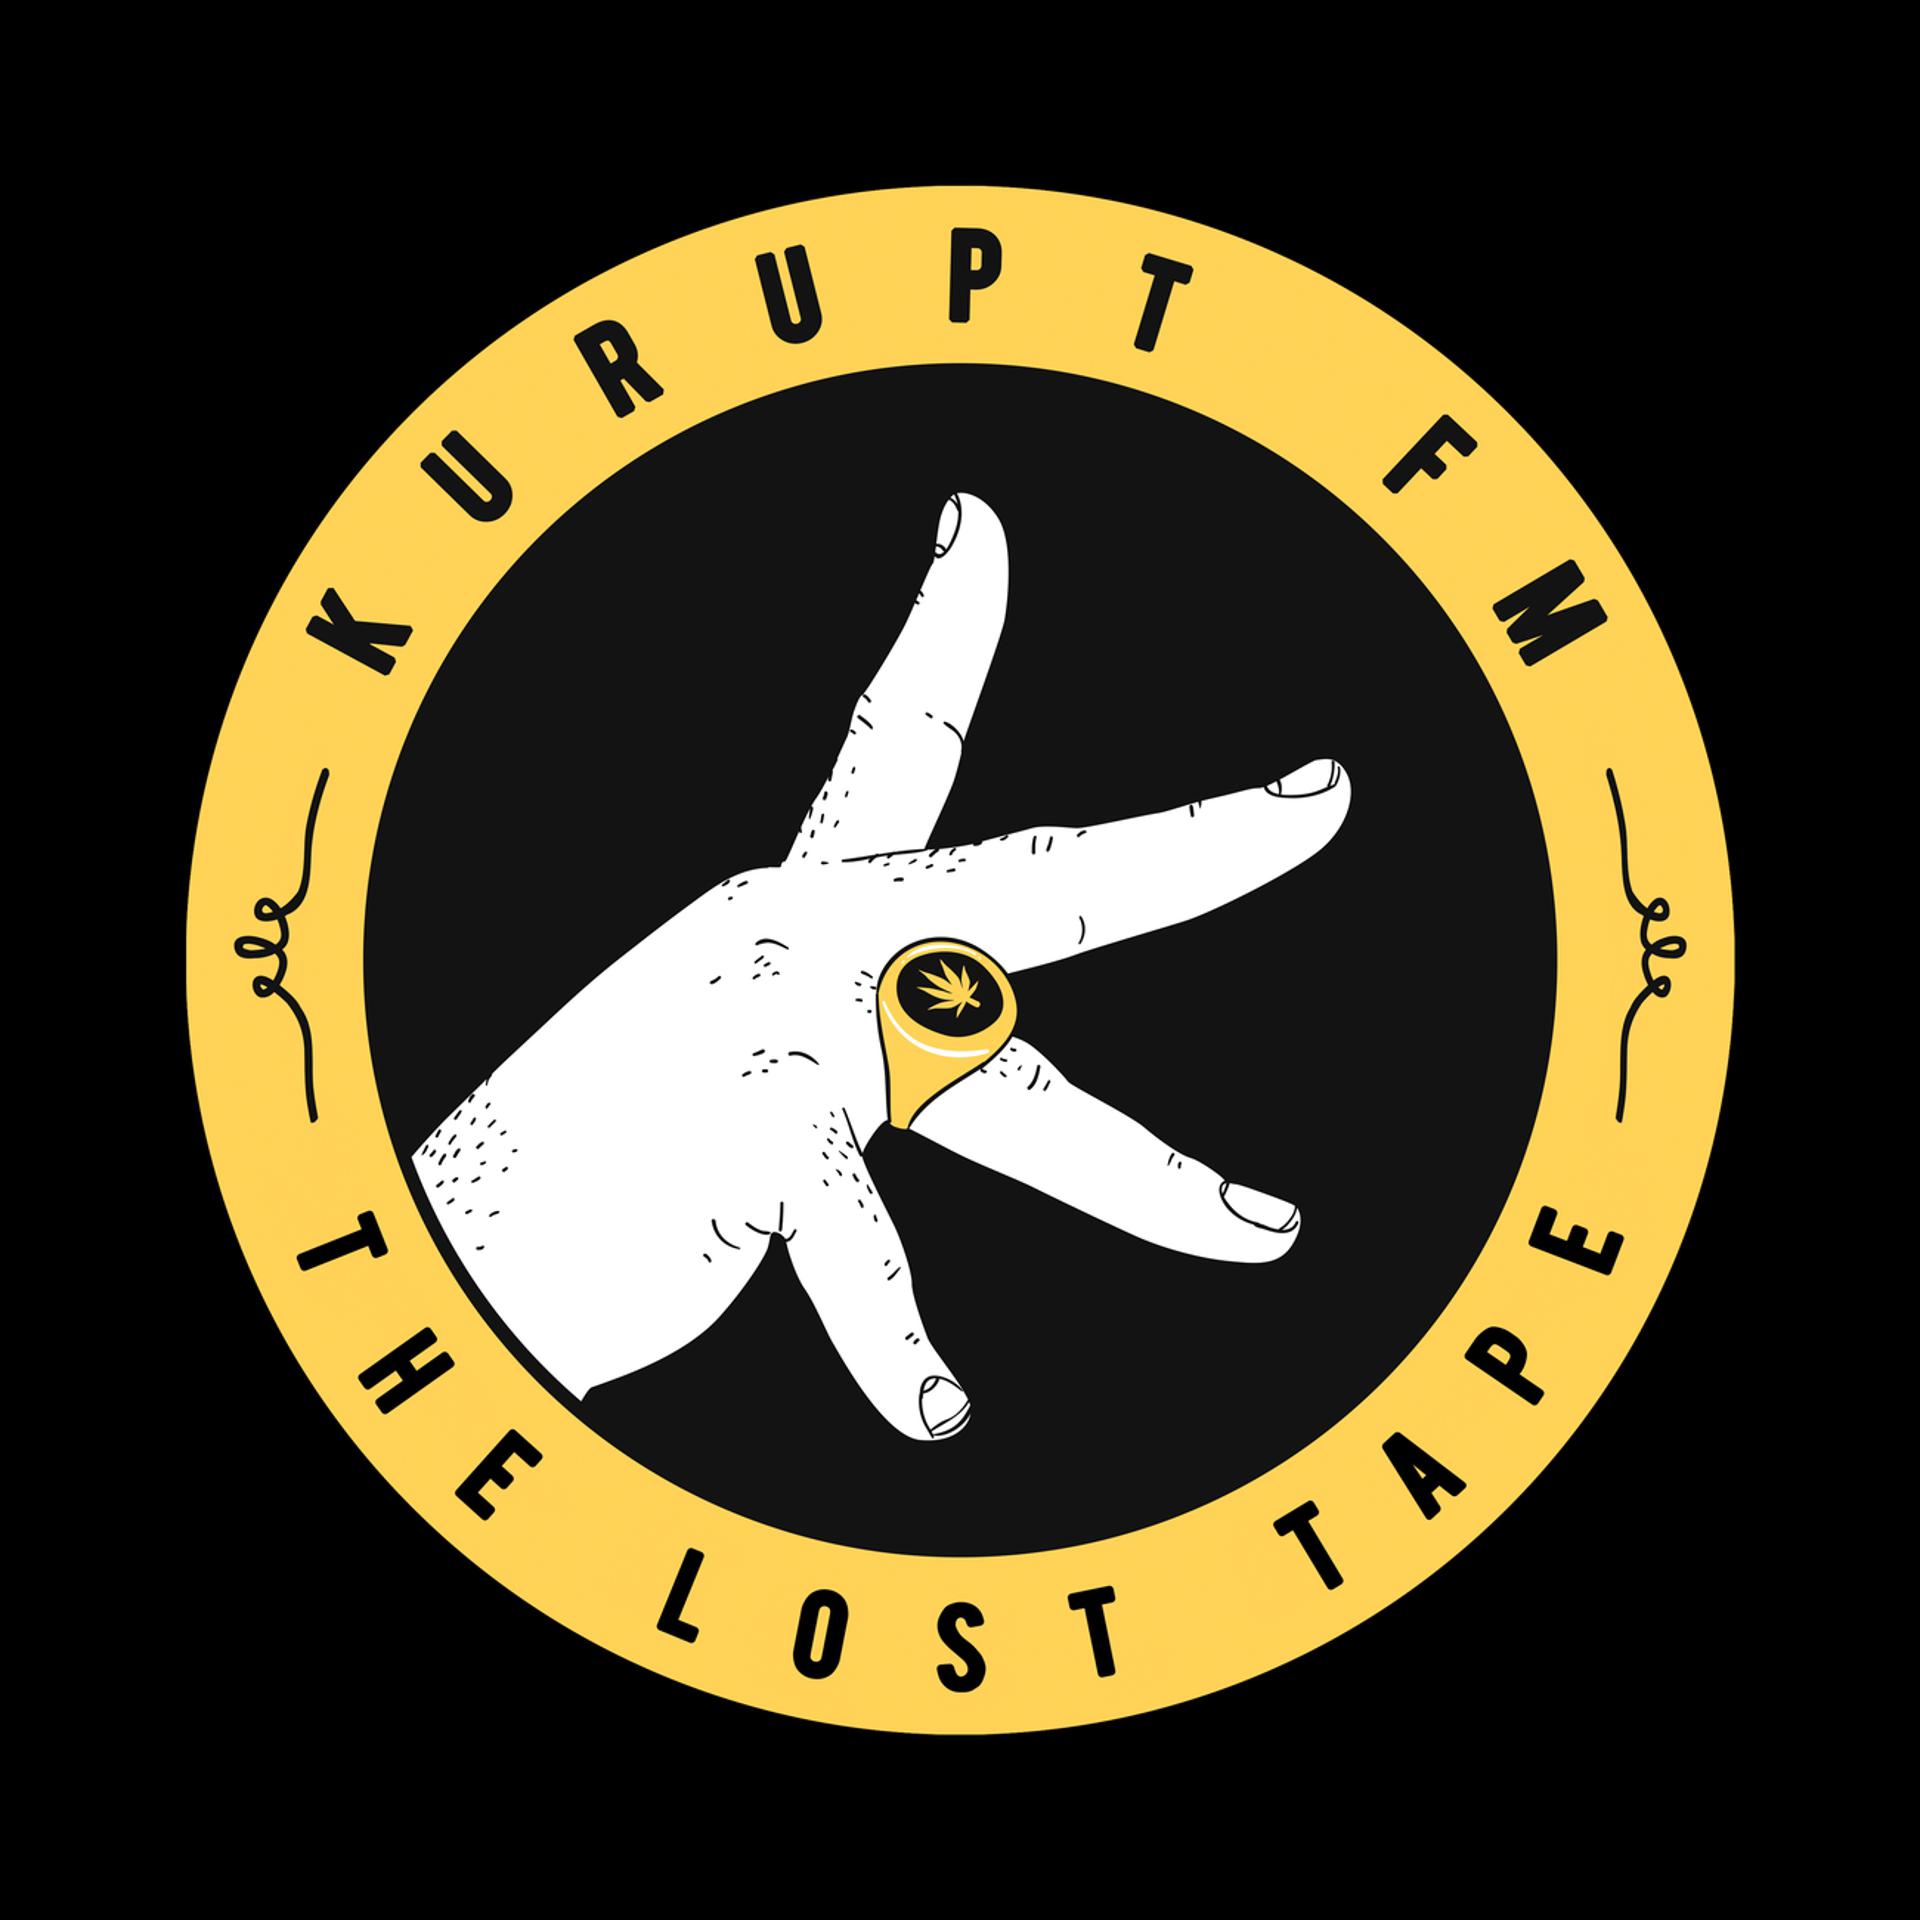 Постер альбома Kurupt FM present The Lost Tape